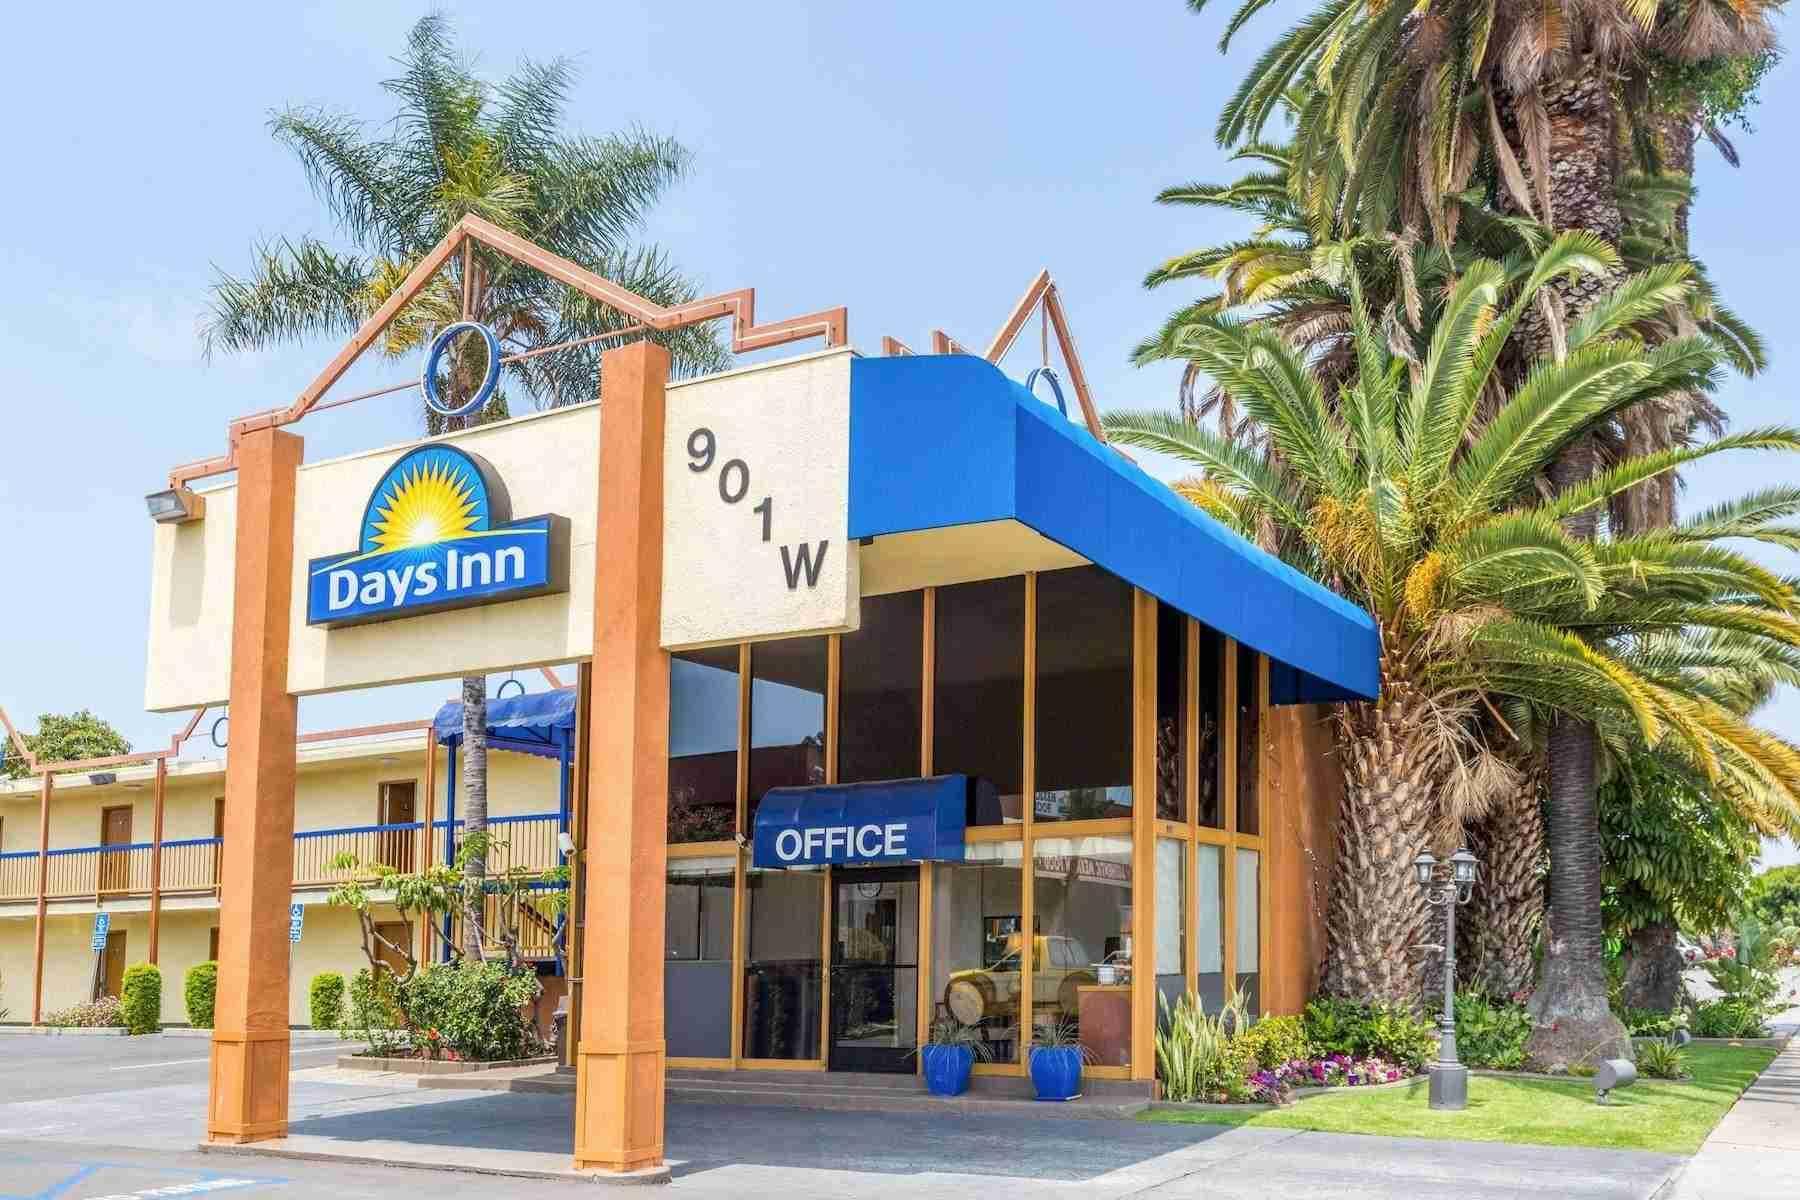 Days Inn Los Angeles LAX Airport Hotel